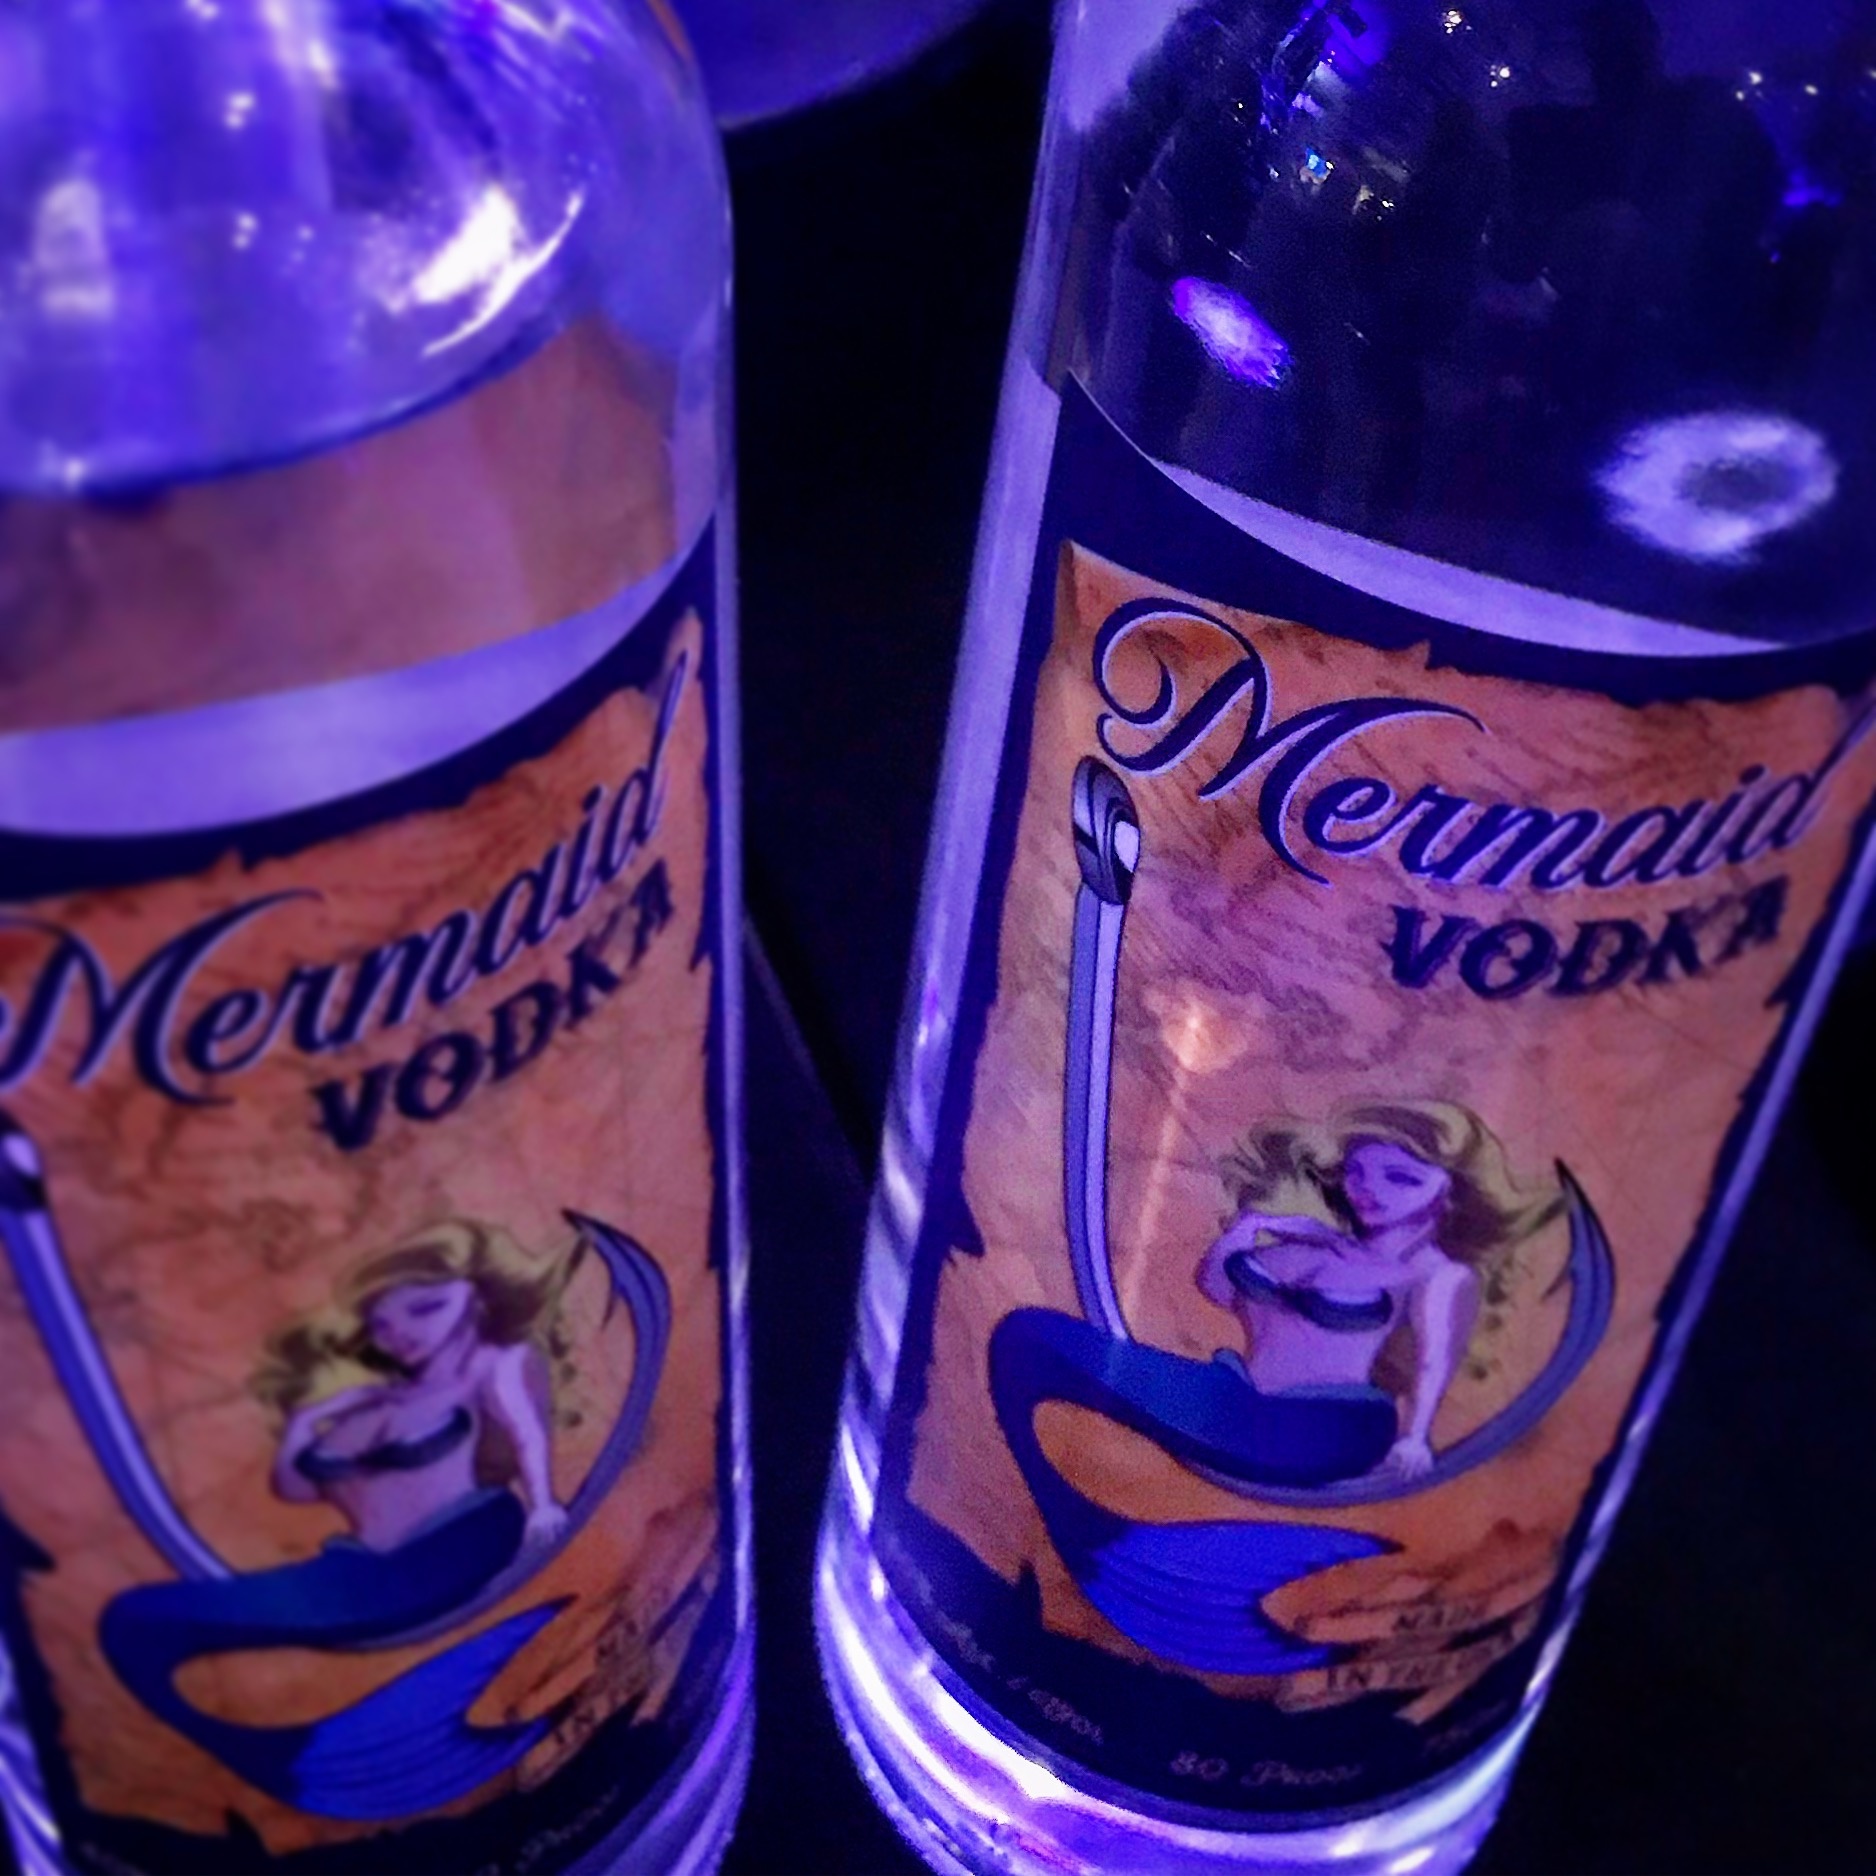 Mermaid Vodka Bottles